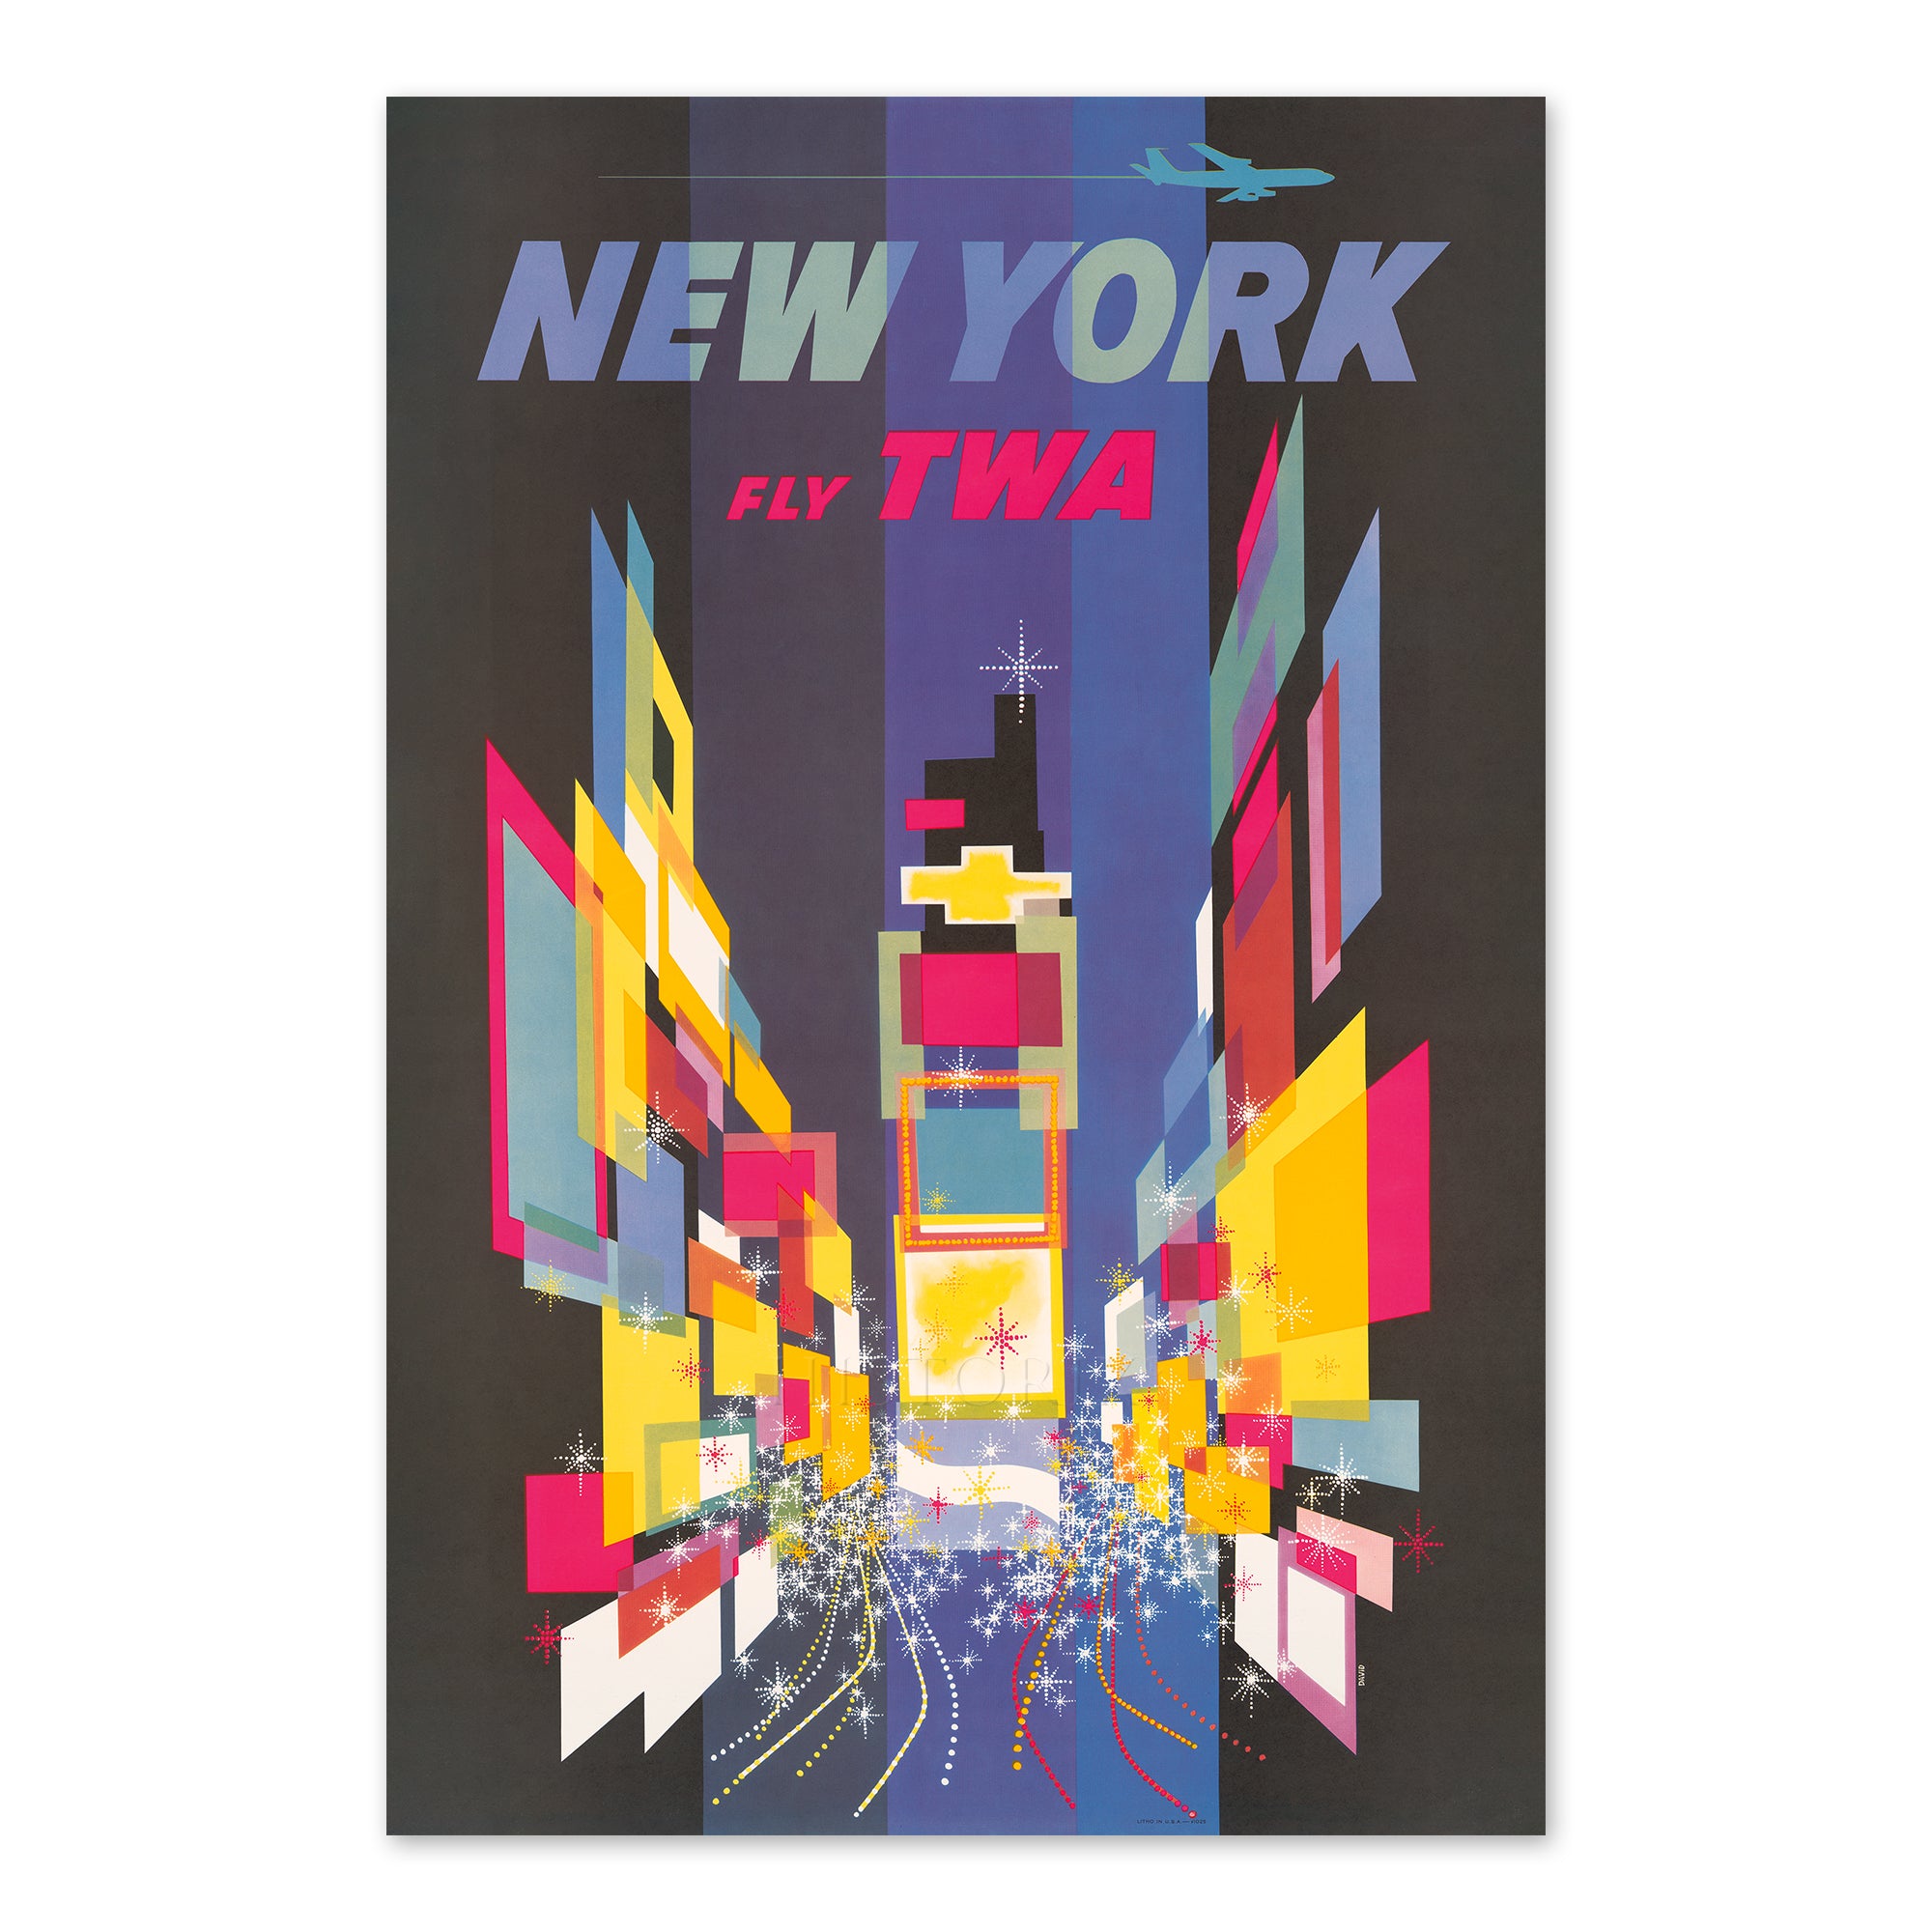 New York Travel Ads (Vintage Art) Posters & Wall Art Prints